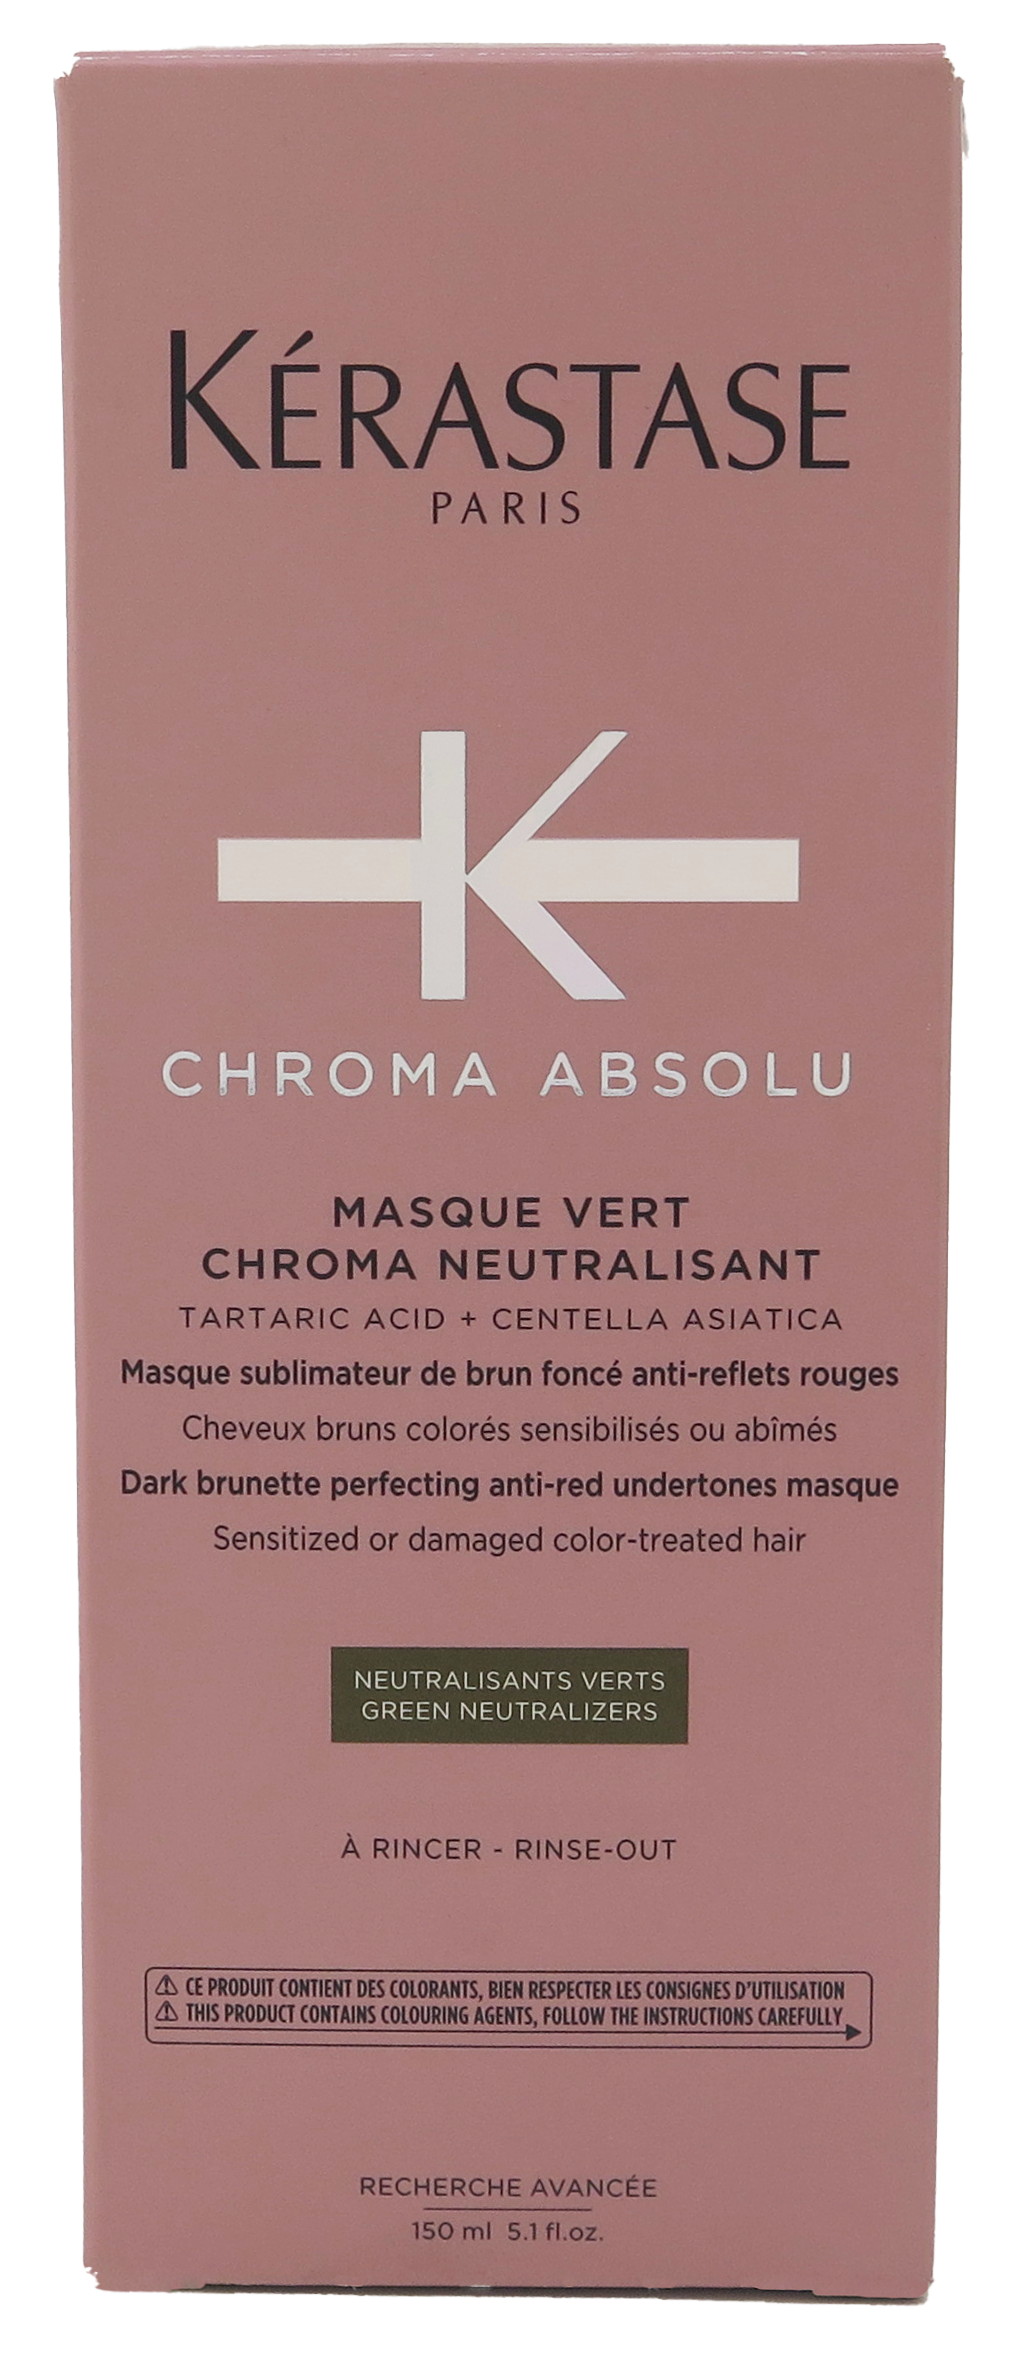 Kerastase Chroma Absolu Masque Vert Chroma Neutralisant 5.1 fl oz